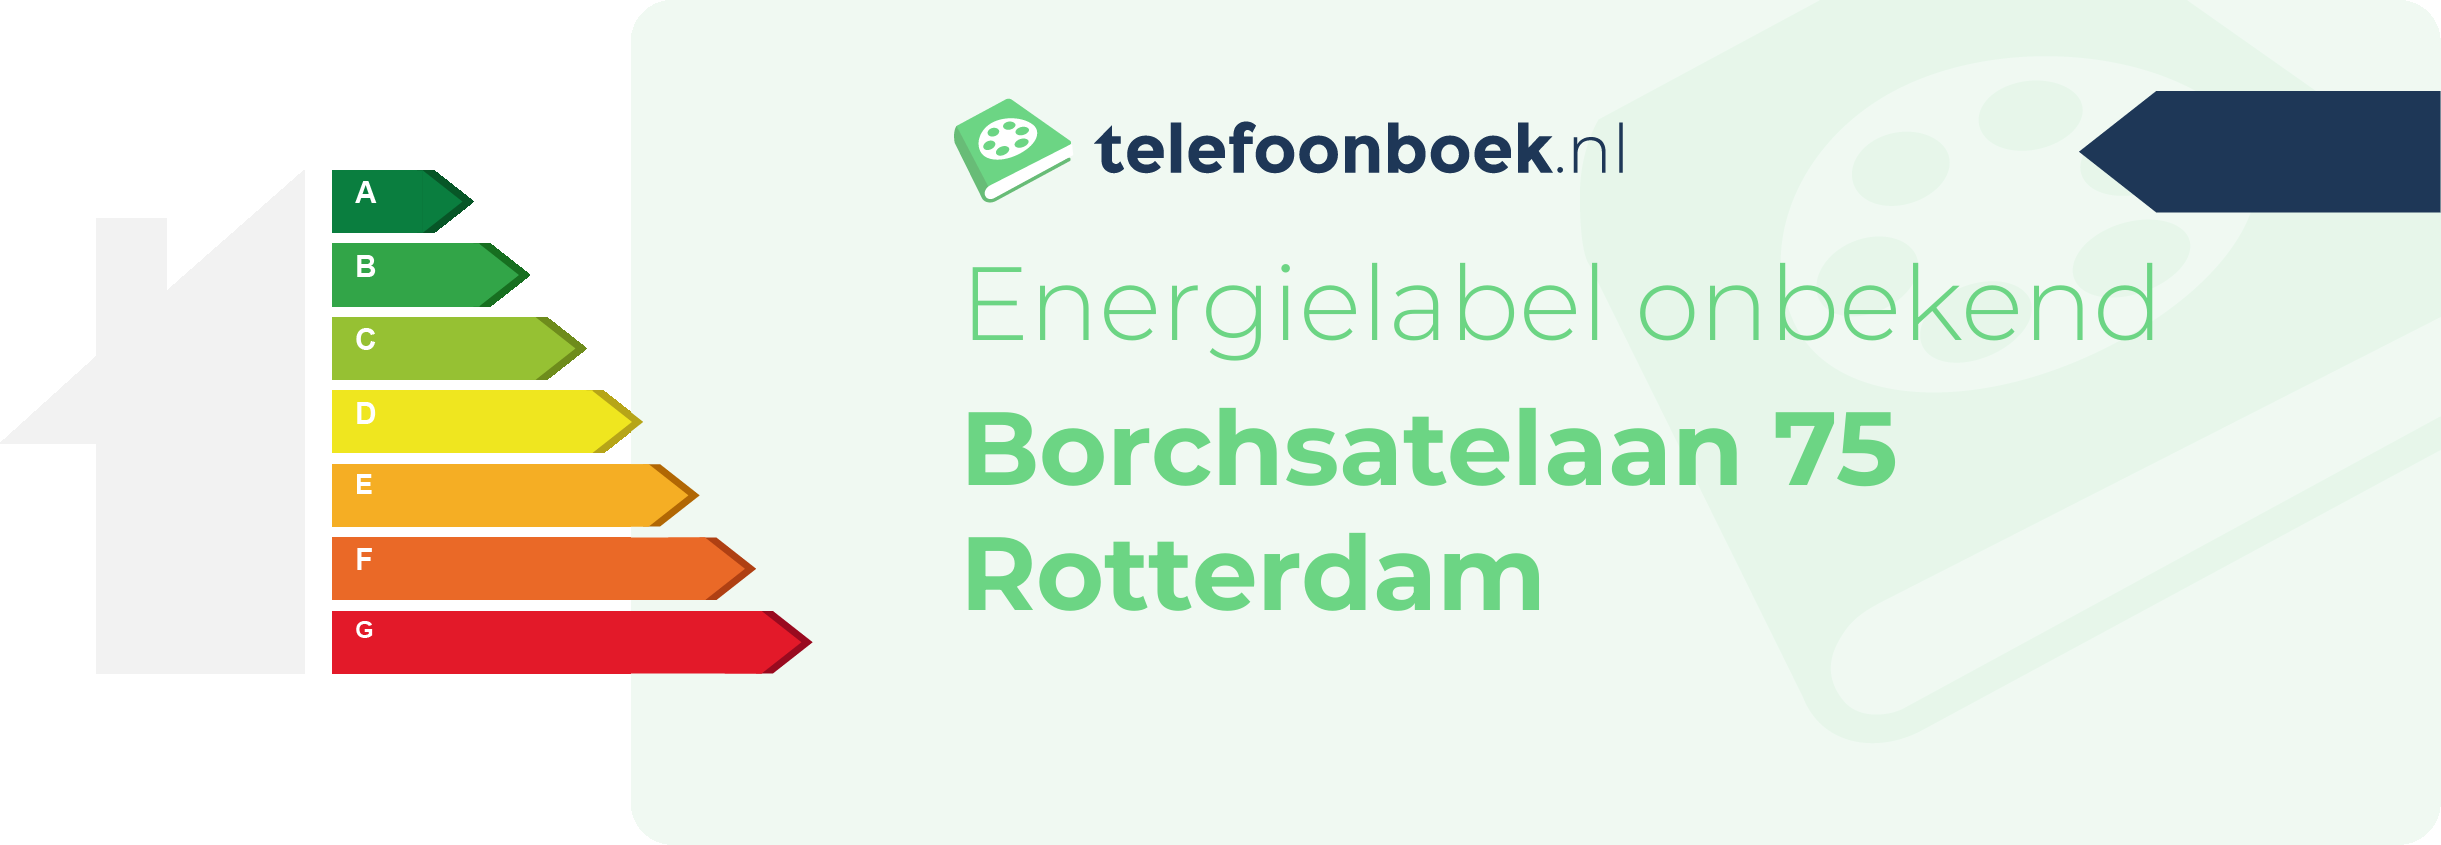 Energielabel Borchsatelaan 75 Rotterdam